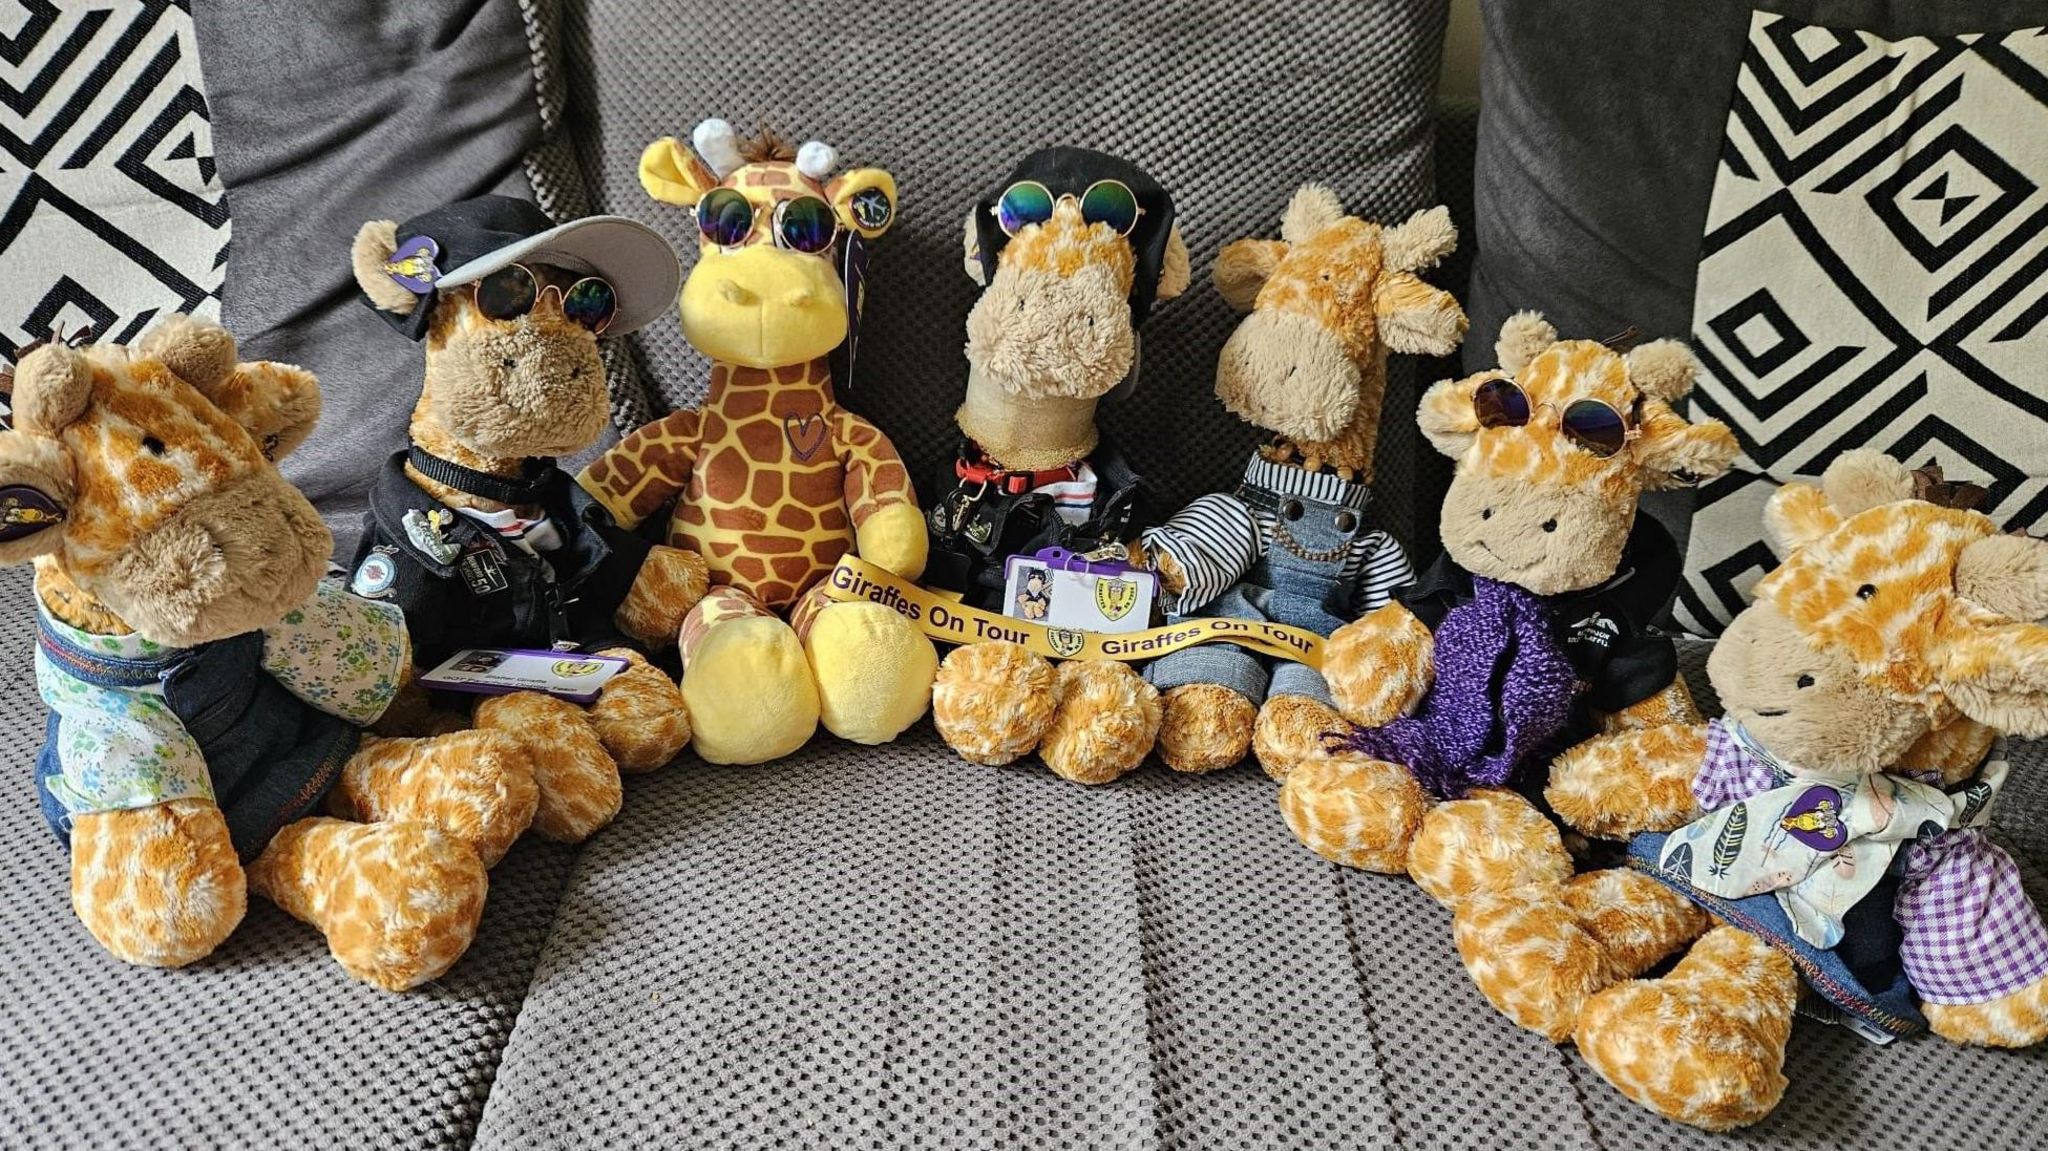 Seven toy giraffes sitting on a sofa 